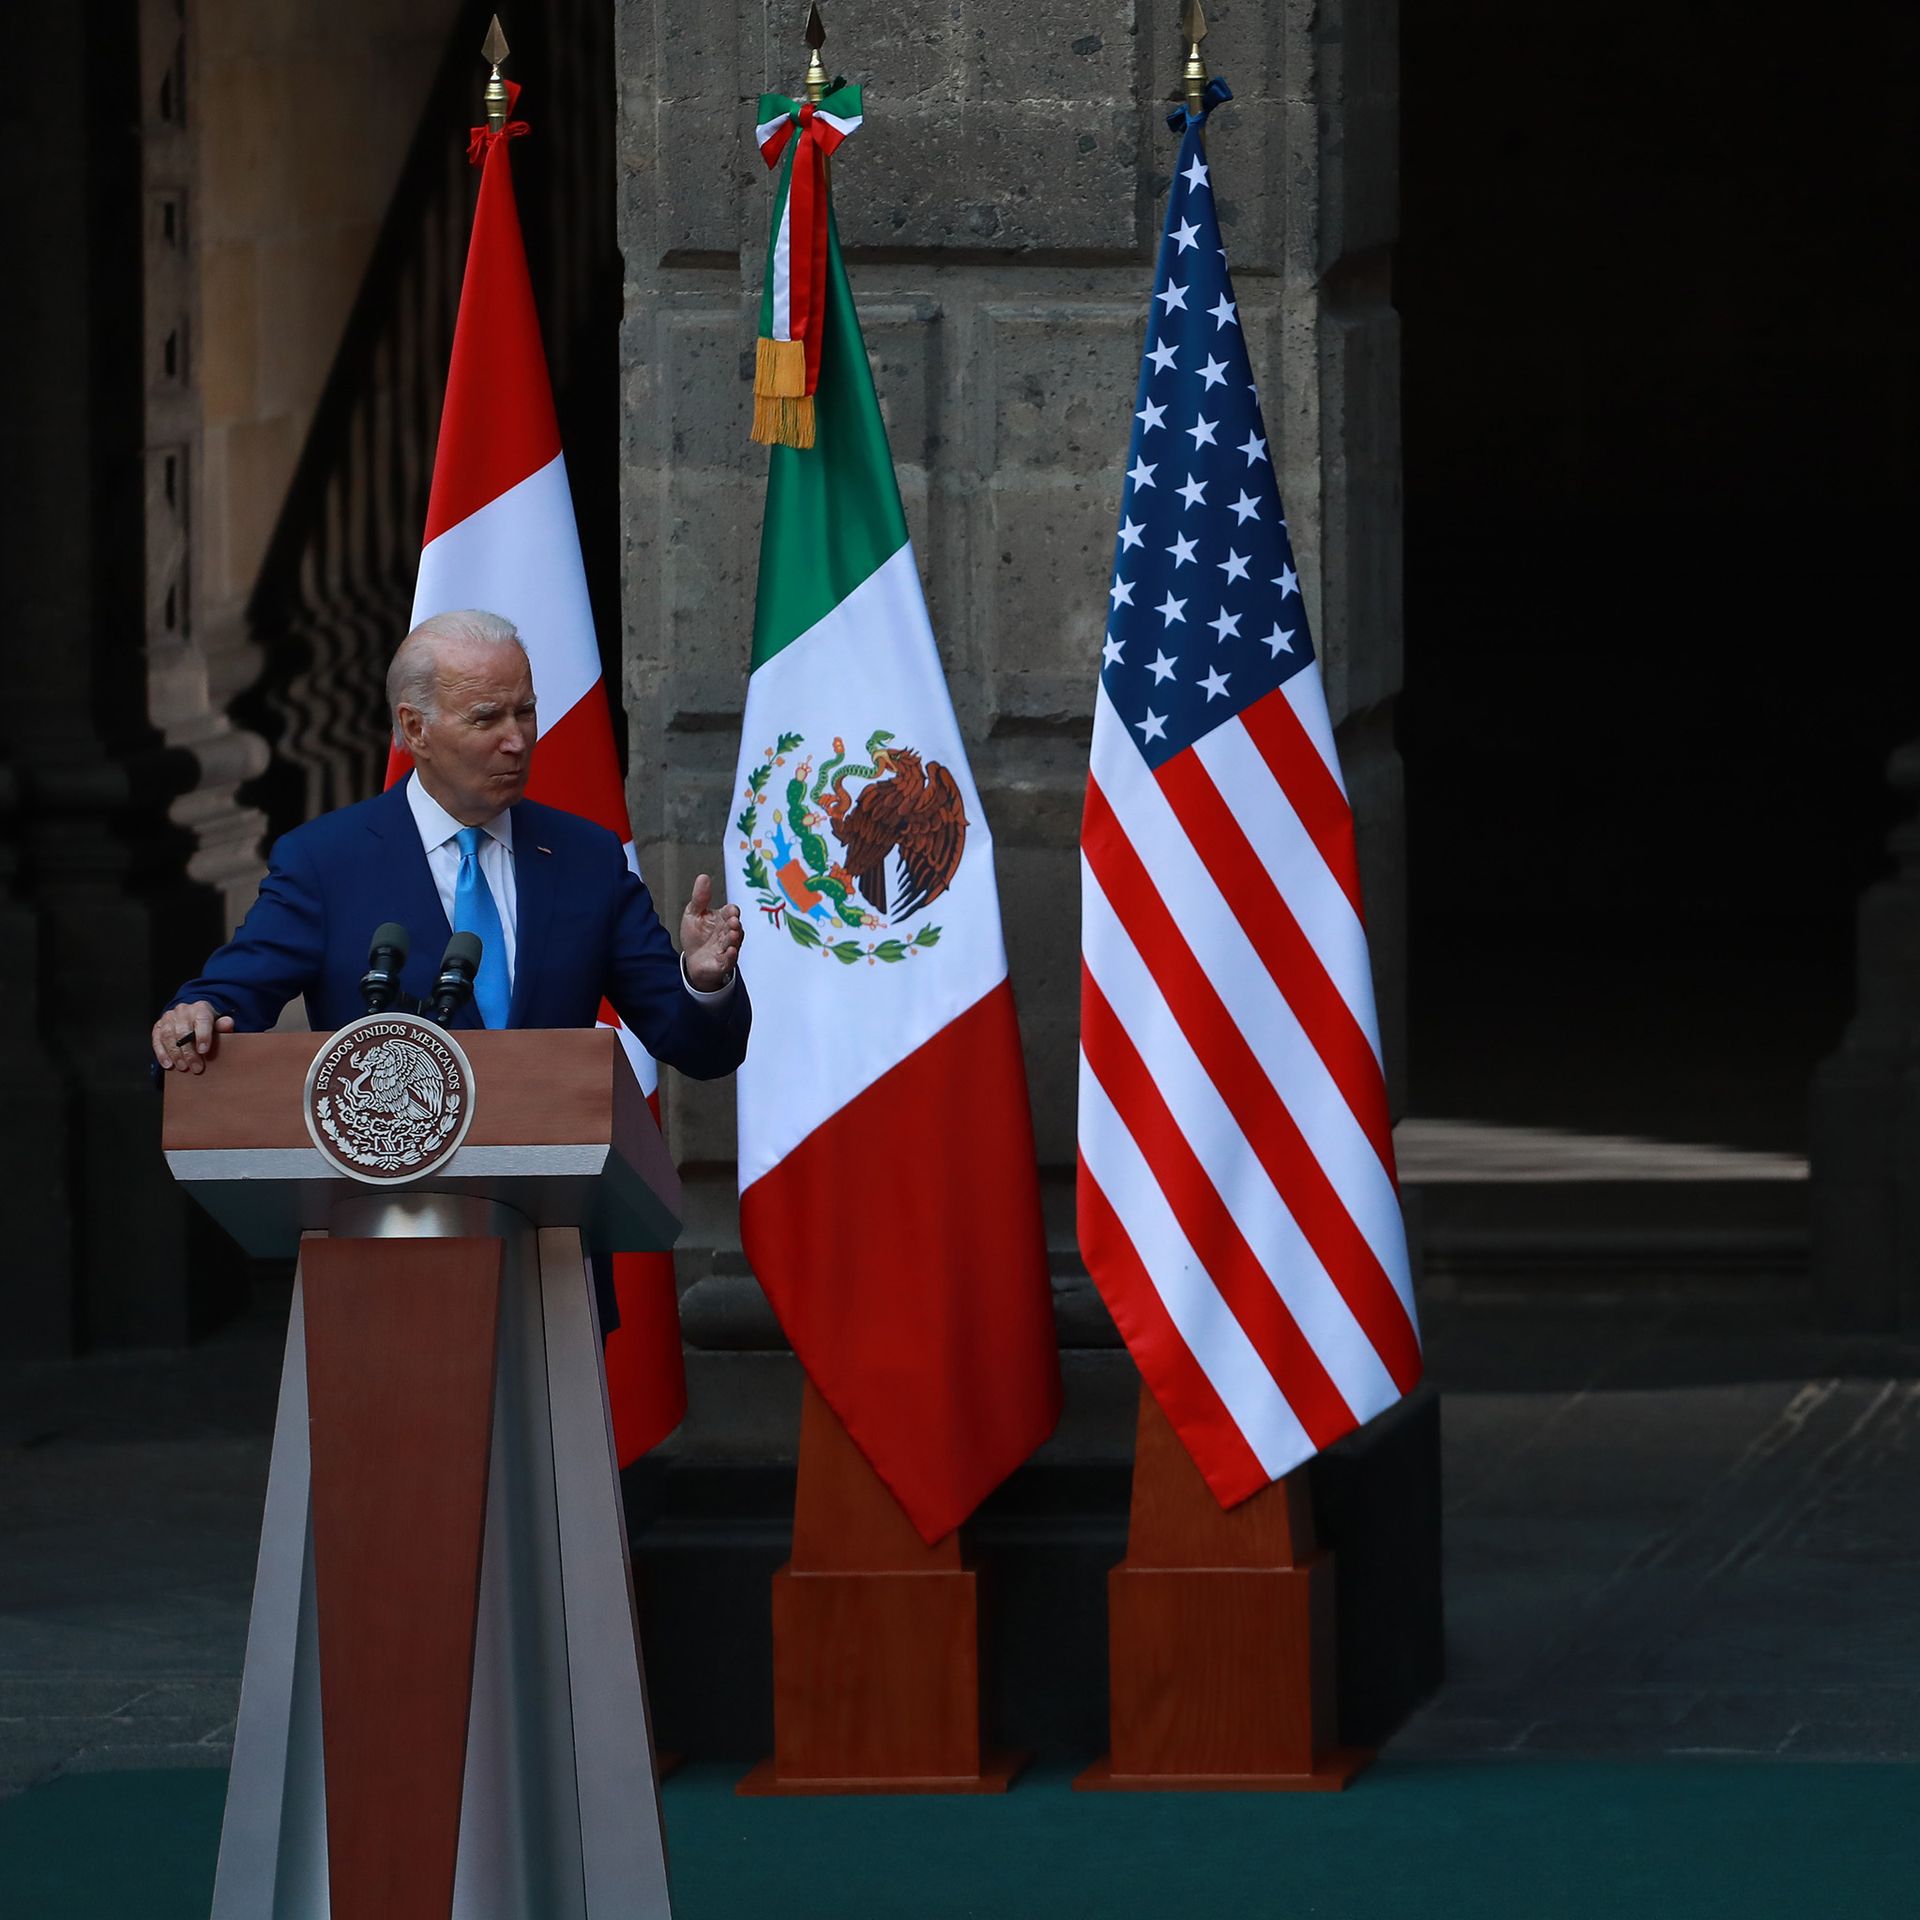 U.S. President Joe Biden (L) and Mexican President Andres Manuel Lopez Obrador (R) attend a press conference 